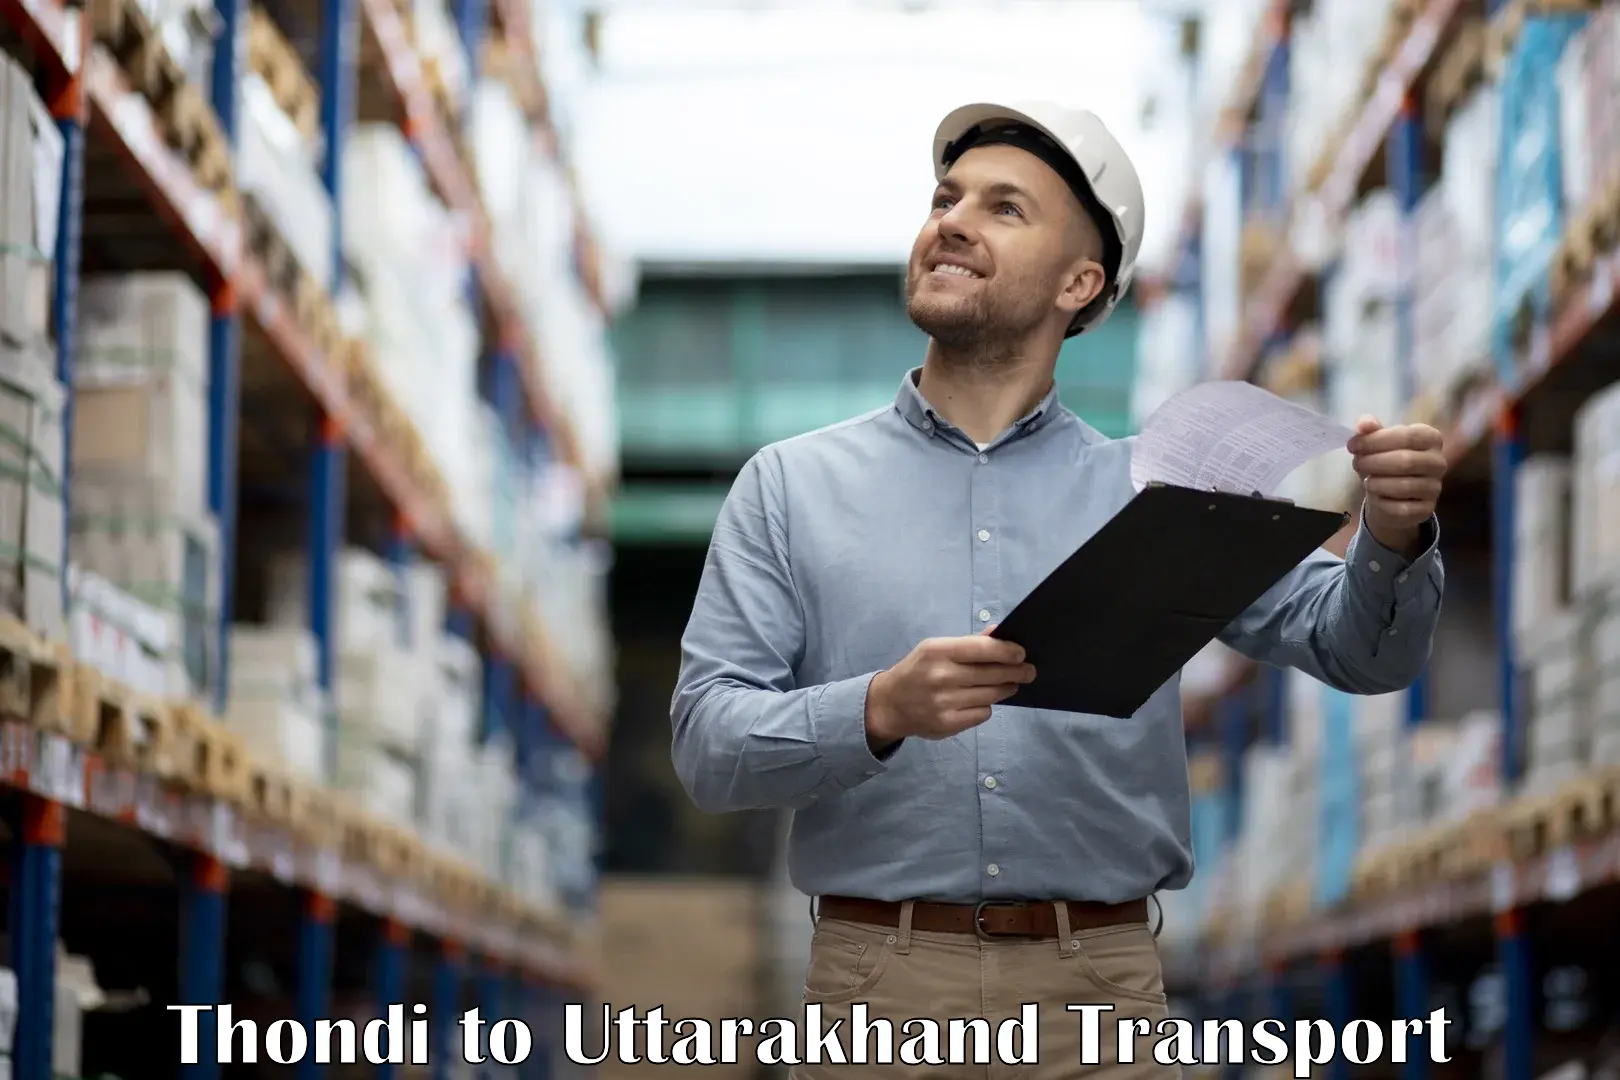 Shipping partner Thondi to Uttarakhand